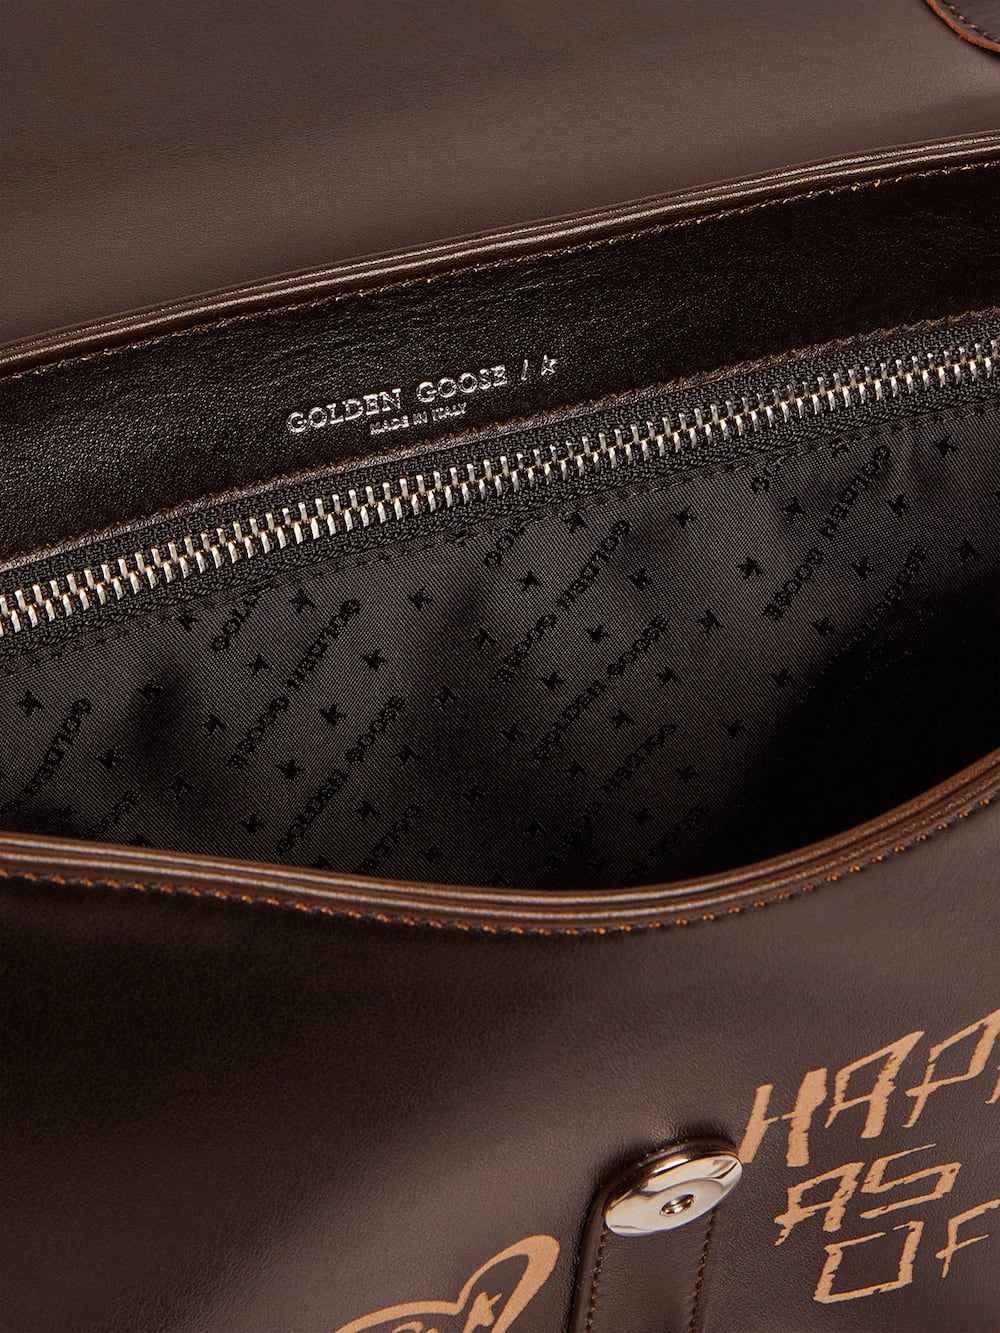 Golden Goose - Sac Rodeo Bag moyen en cuir noir avec inscriptions contrastées in 